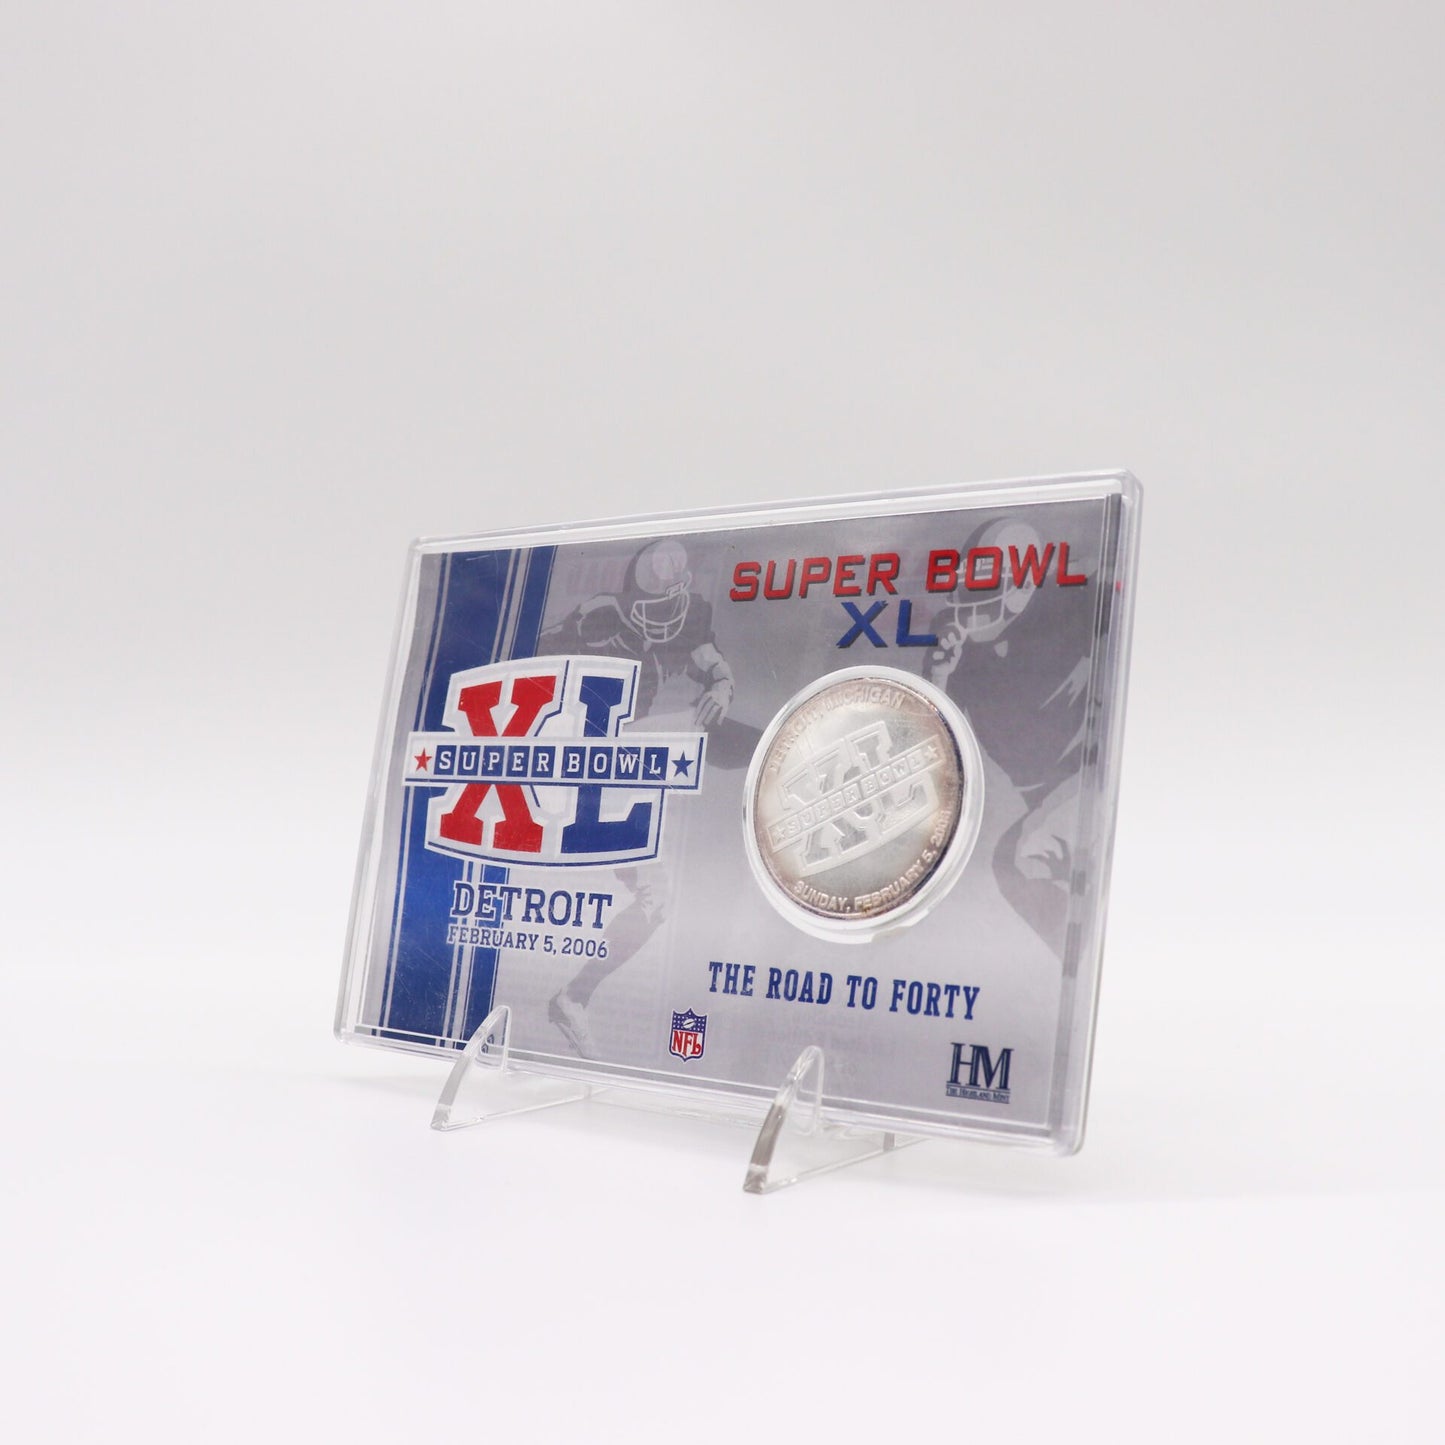 Super Bowl XL Commemorative Coin Encased in Decorative Protective Plastic Holder